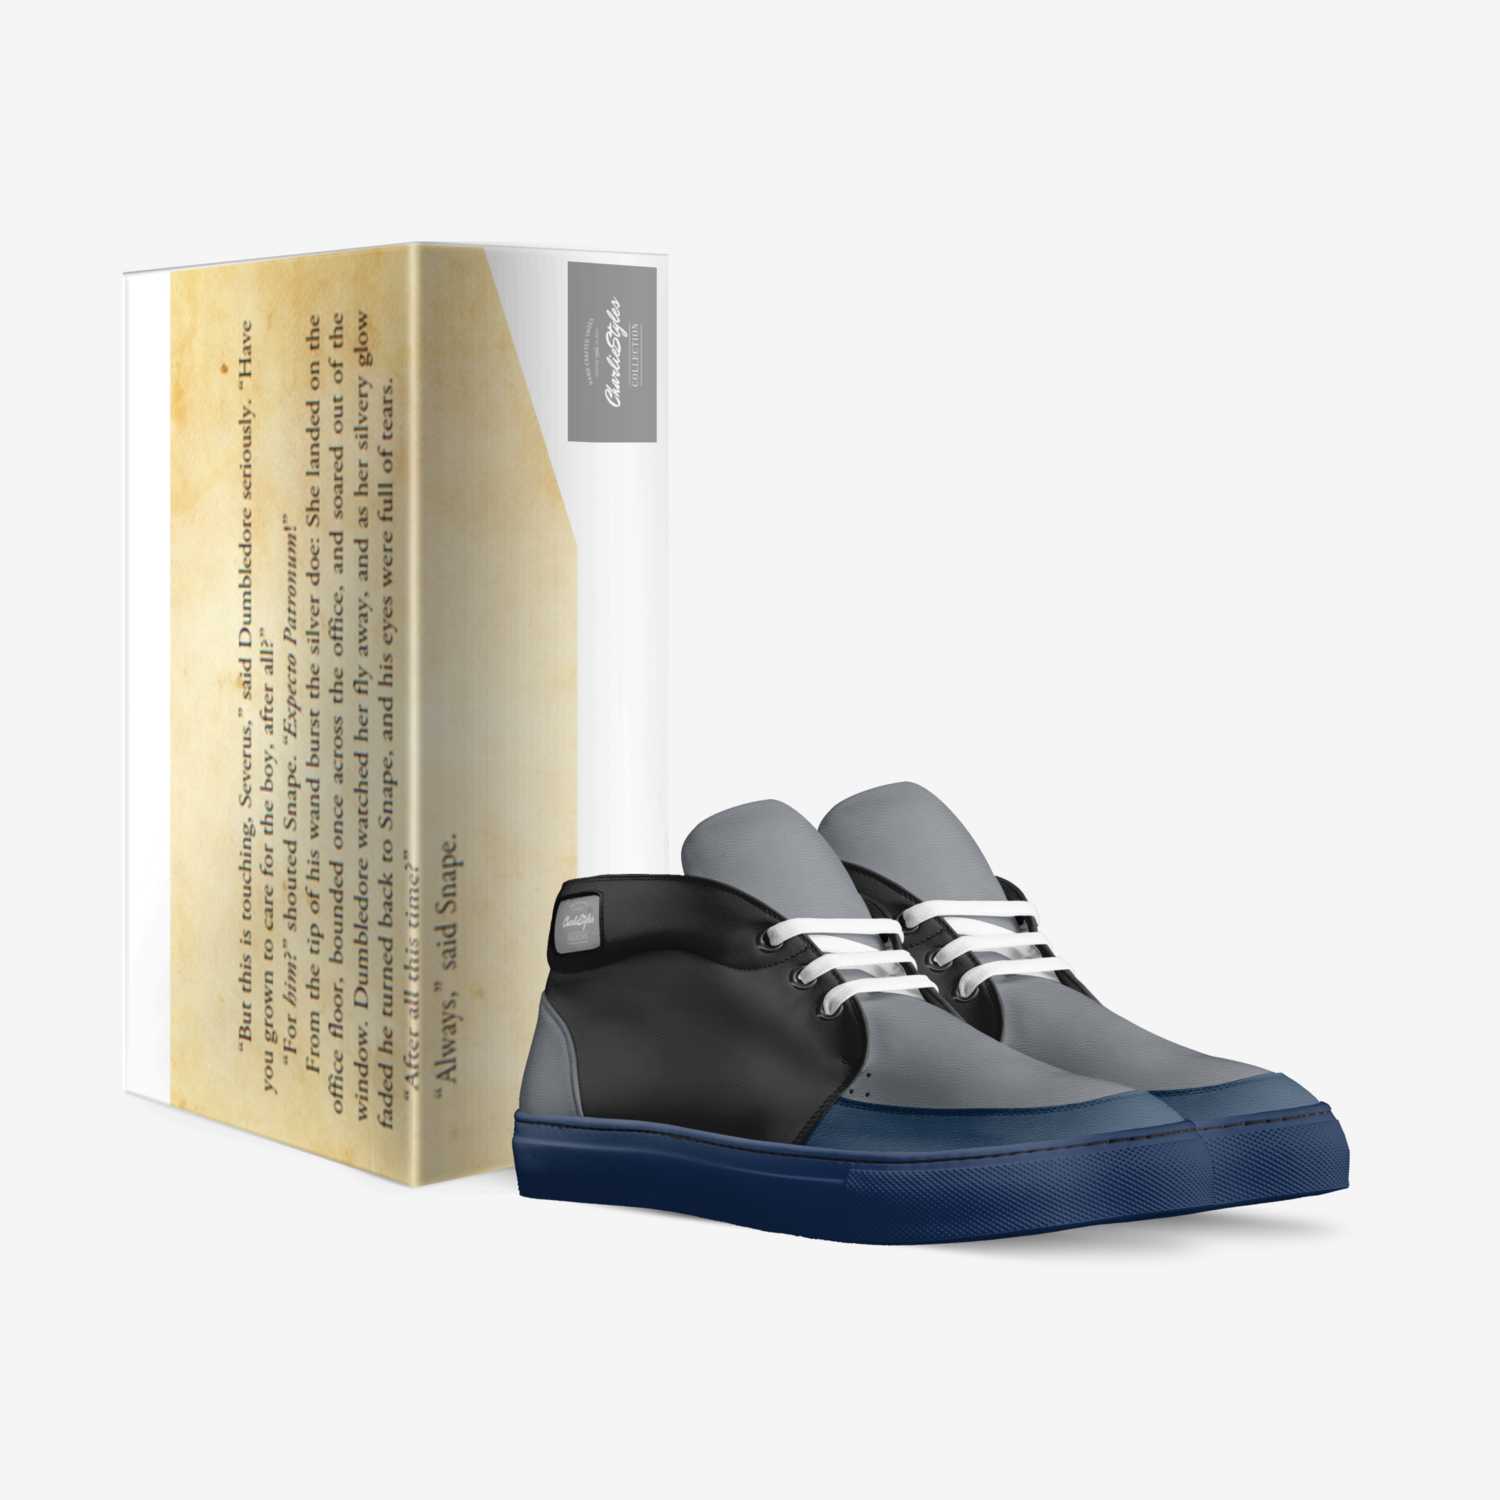 CharlieStyles custom made in Italy shoes by Rowan Humphreys | Box view